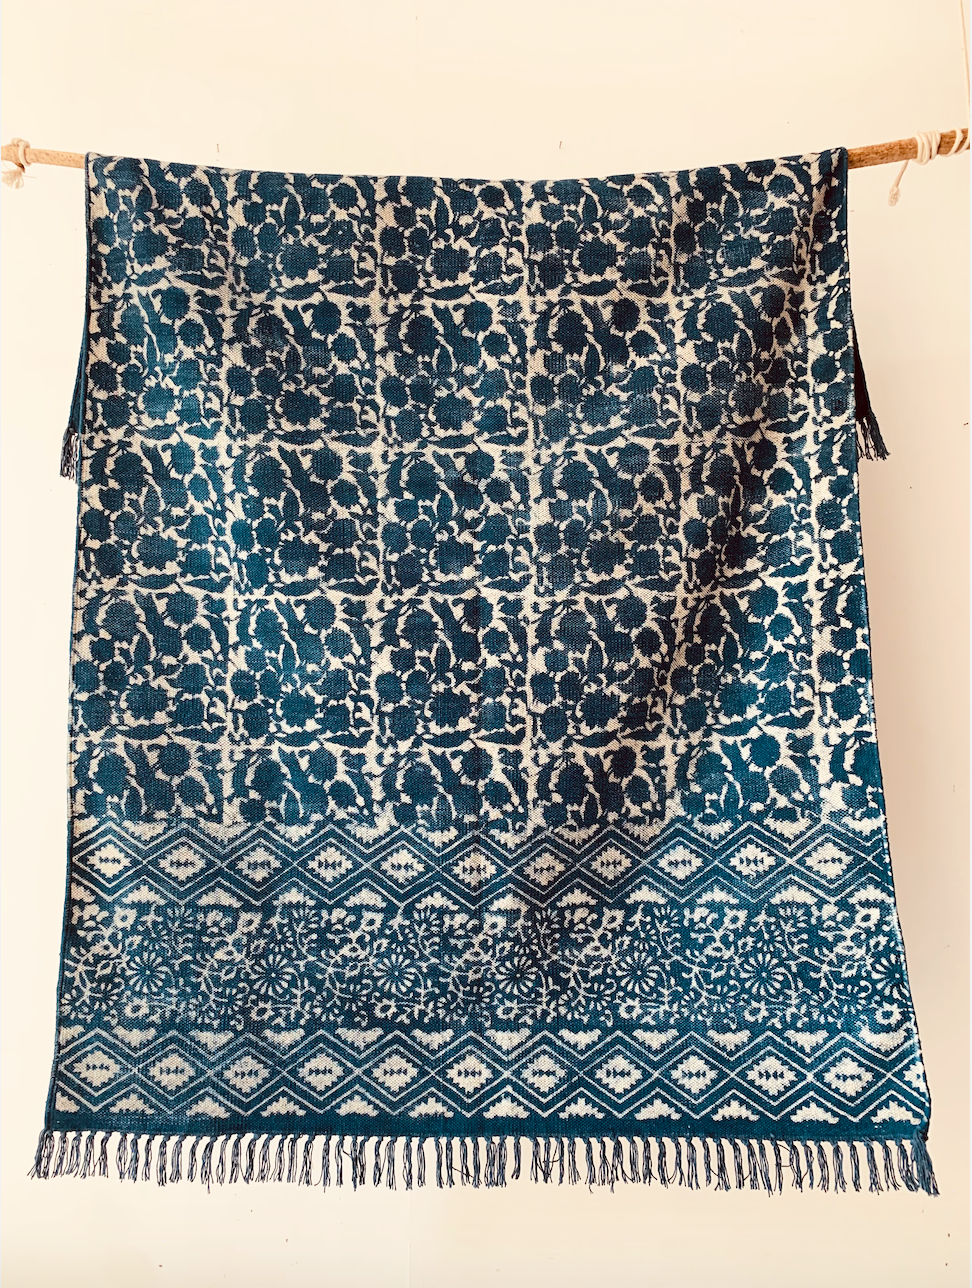 Floral print with border indigo Cotton rug 4x6 ft/120*180 cm